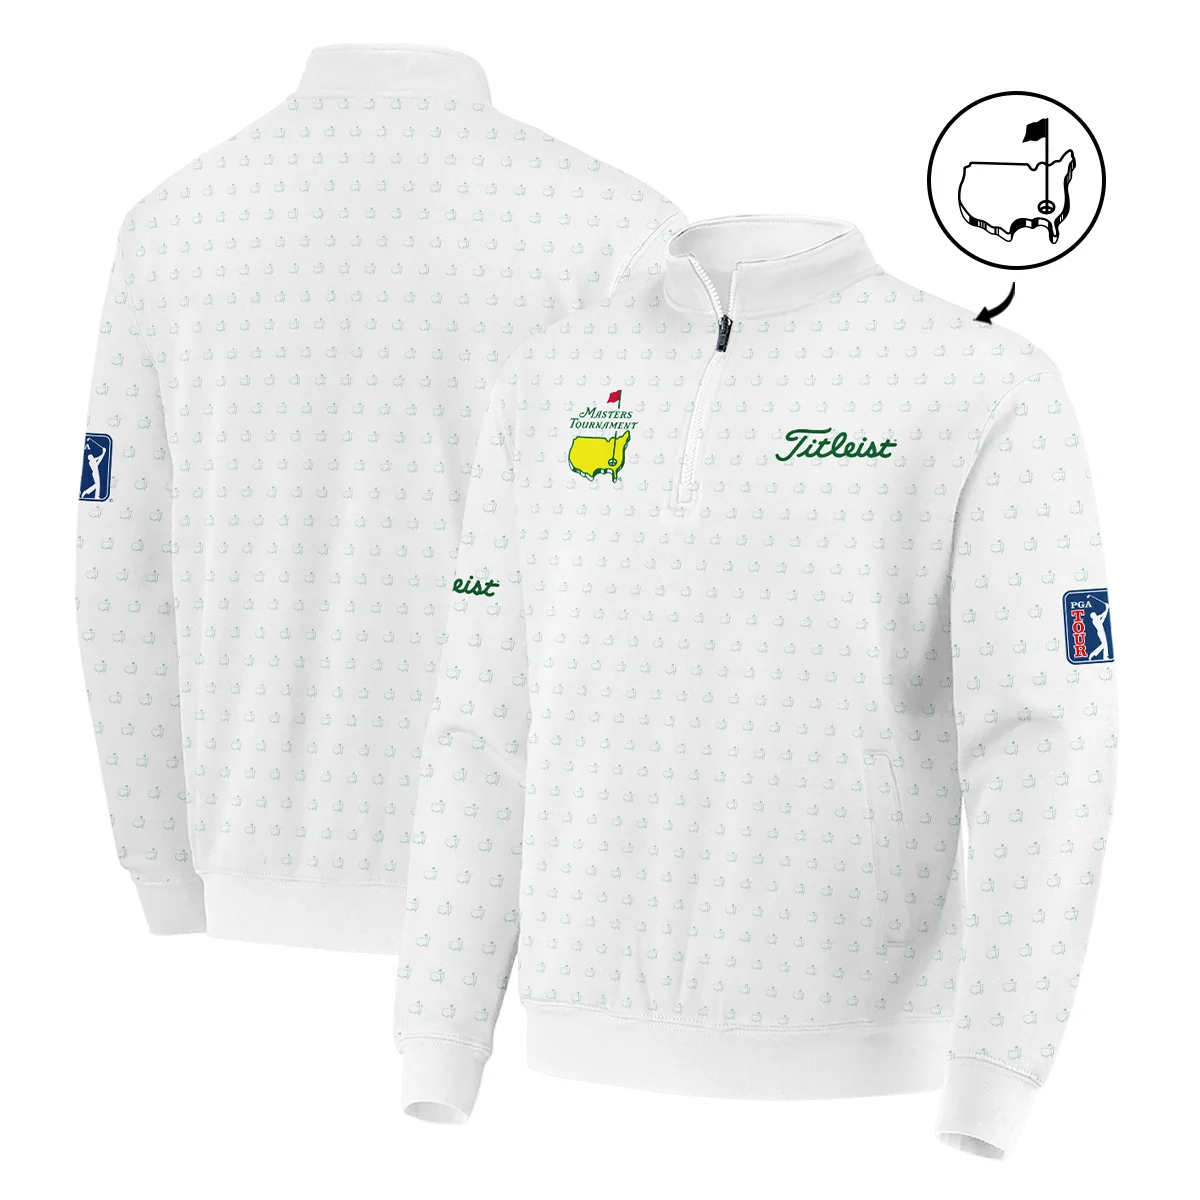 Golf Sport Masters Tournament Titleist Polo Shirt Sports Logo Pattern White Green Polo Shirt For Men